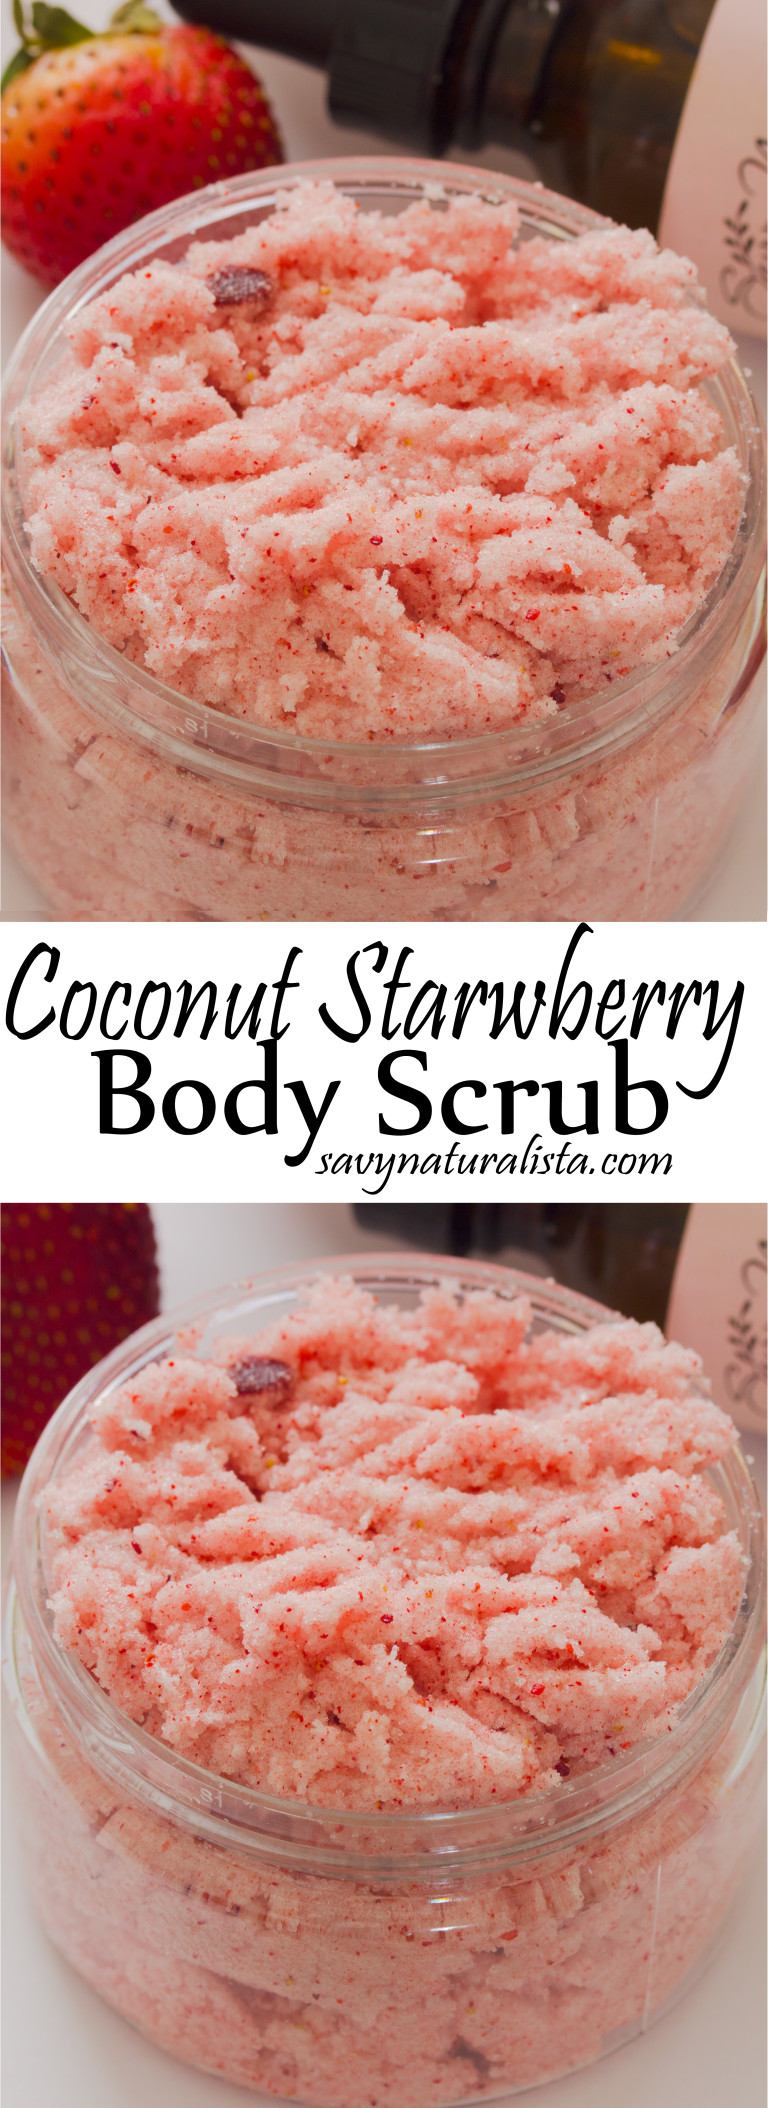 Strawberry Coconut Body Scrub Recipe - Savvy Naturalista - Strawberry Coconut Body Scrub Recipe - Savvy Naturalista -   18 diy Beauty gommage ideas